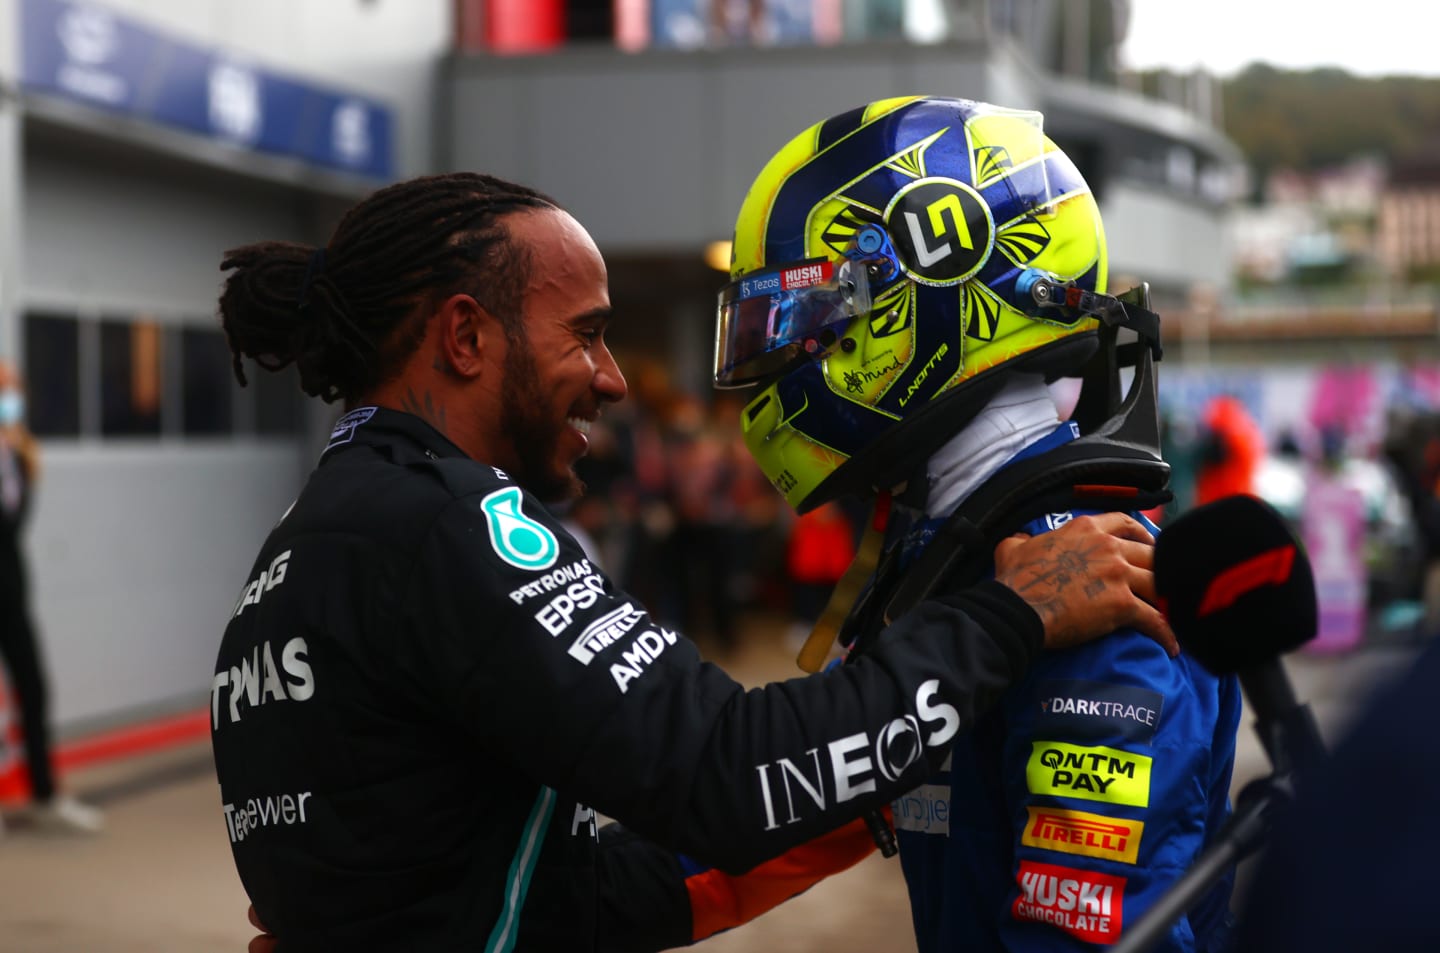 SOCHI, RUSSIA - SEPTEMBER 26: Race winner Lewis Hamilton of Great Britain and Mercedes GP hugs